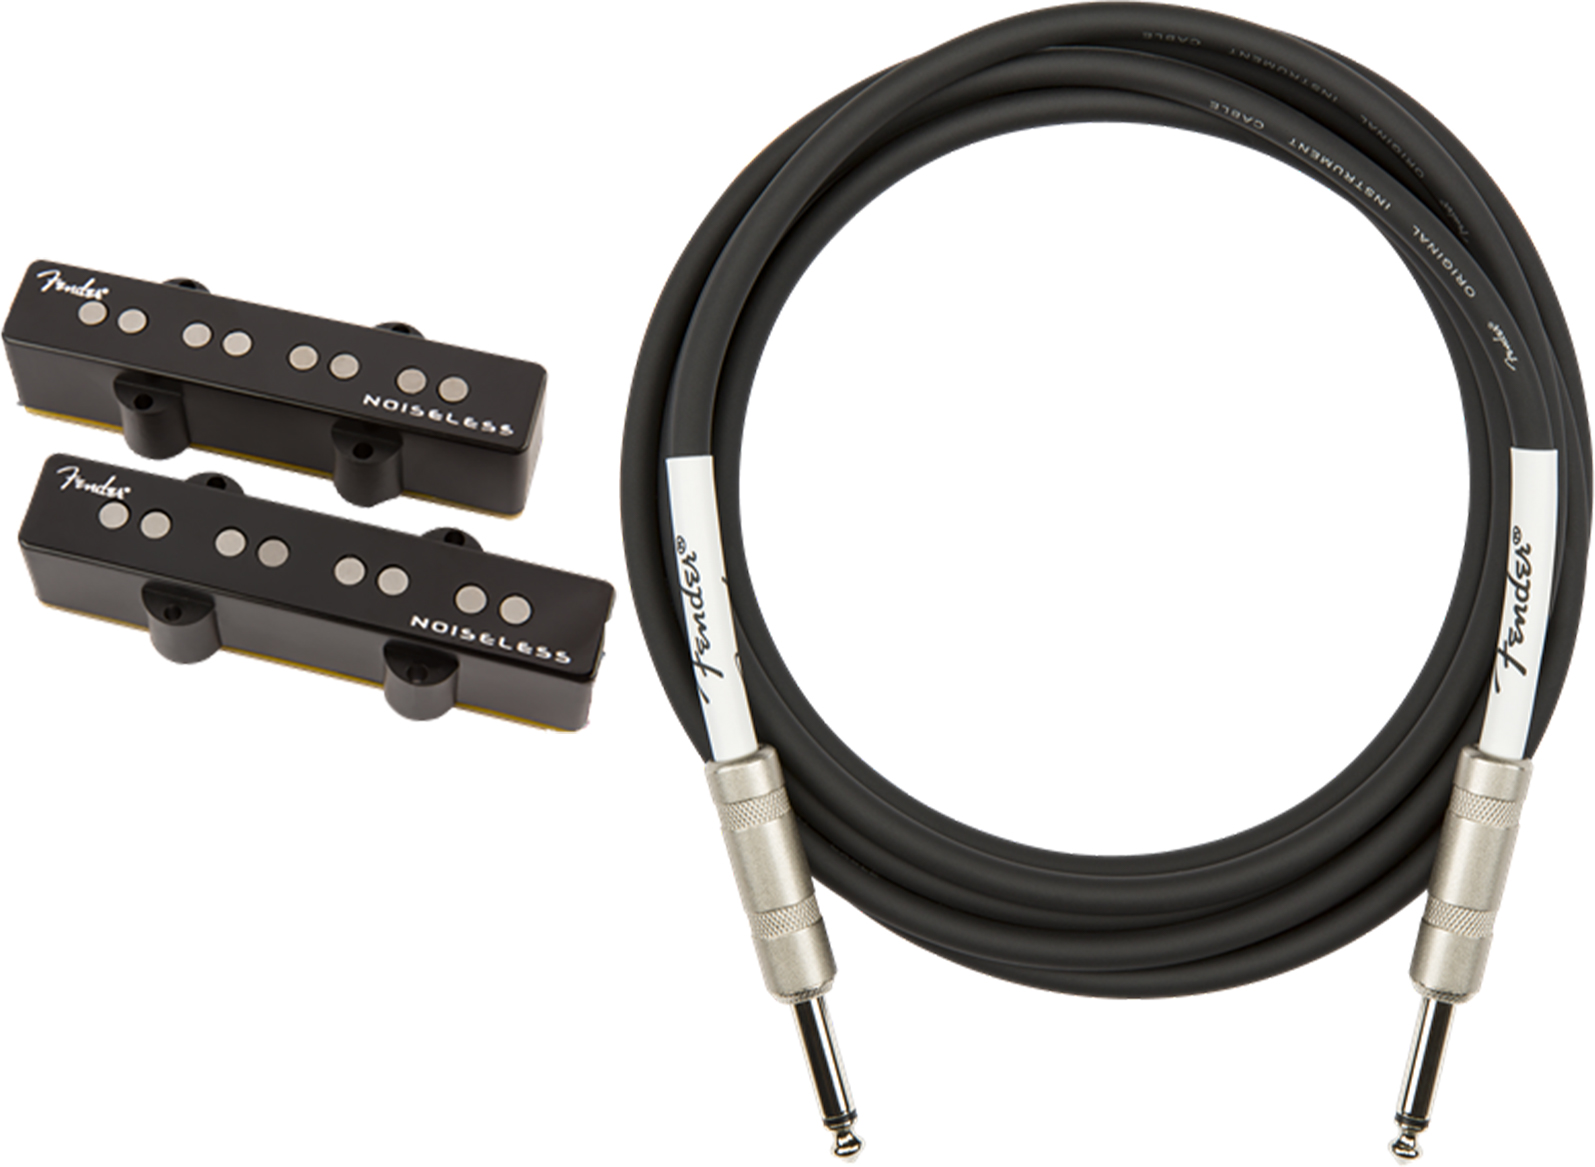 Fender Gen 4 Noiseless Jazz Bass Pickups w/ Instrument Cable 